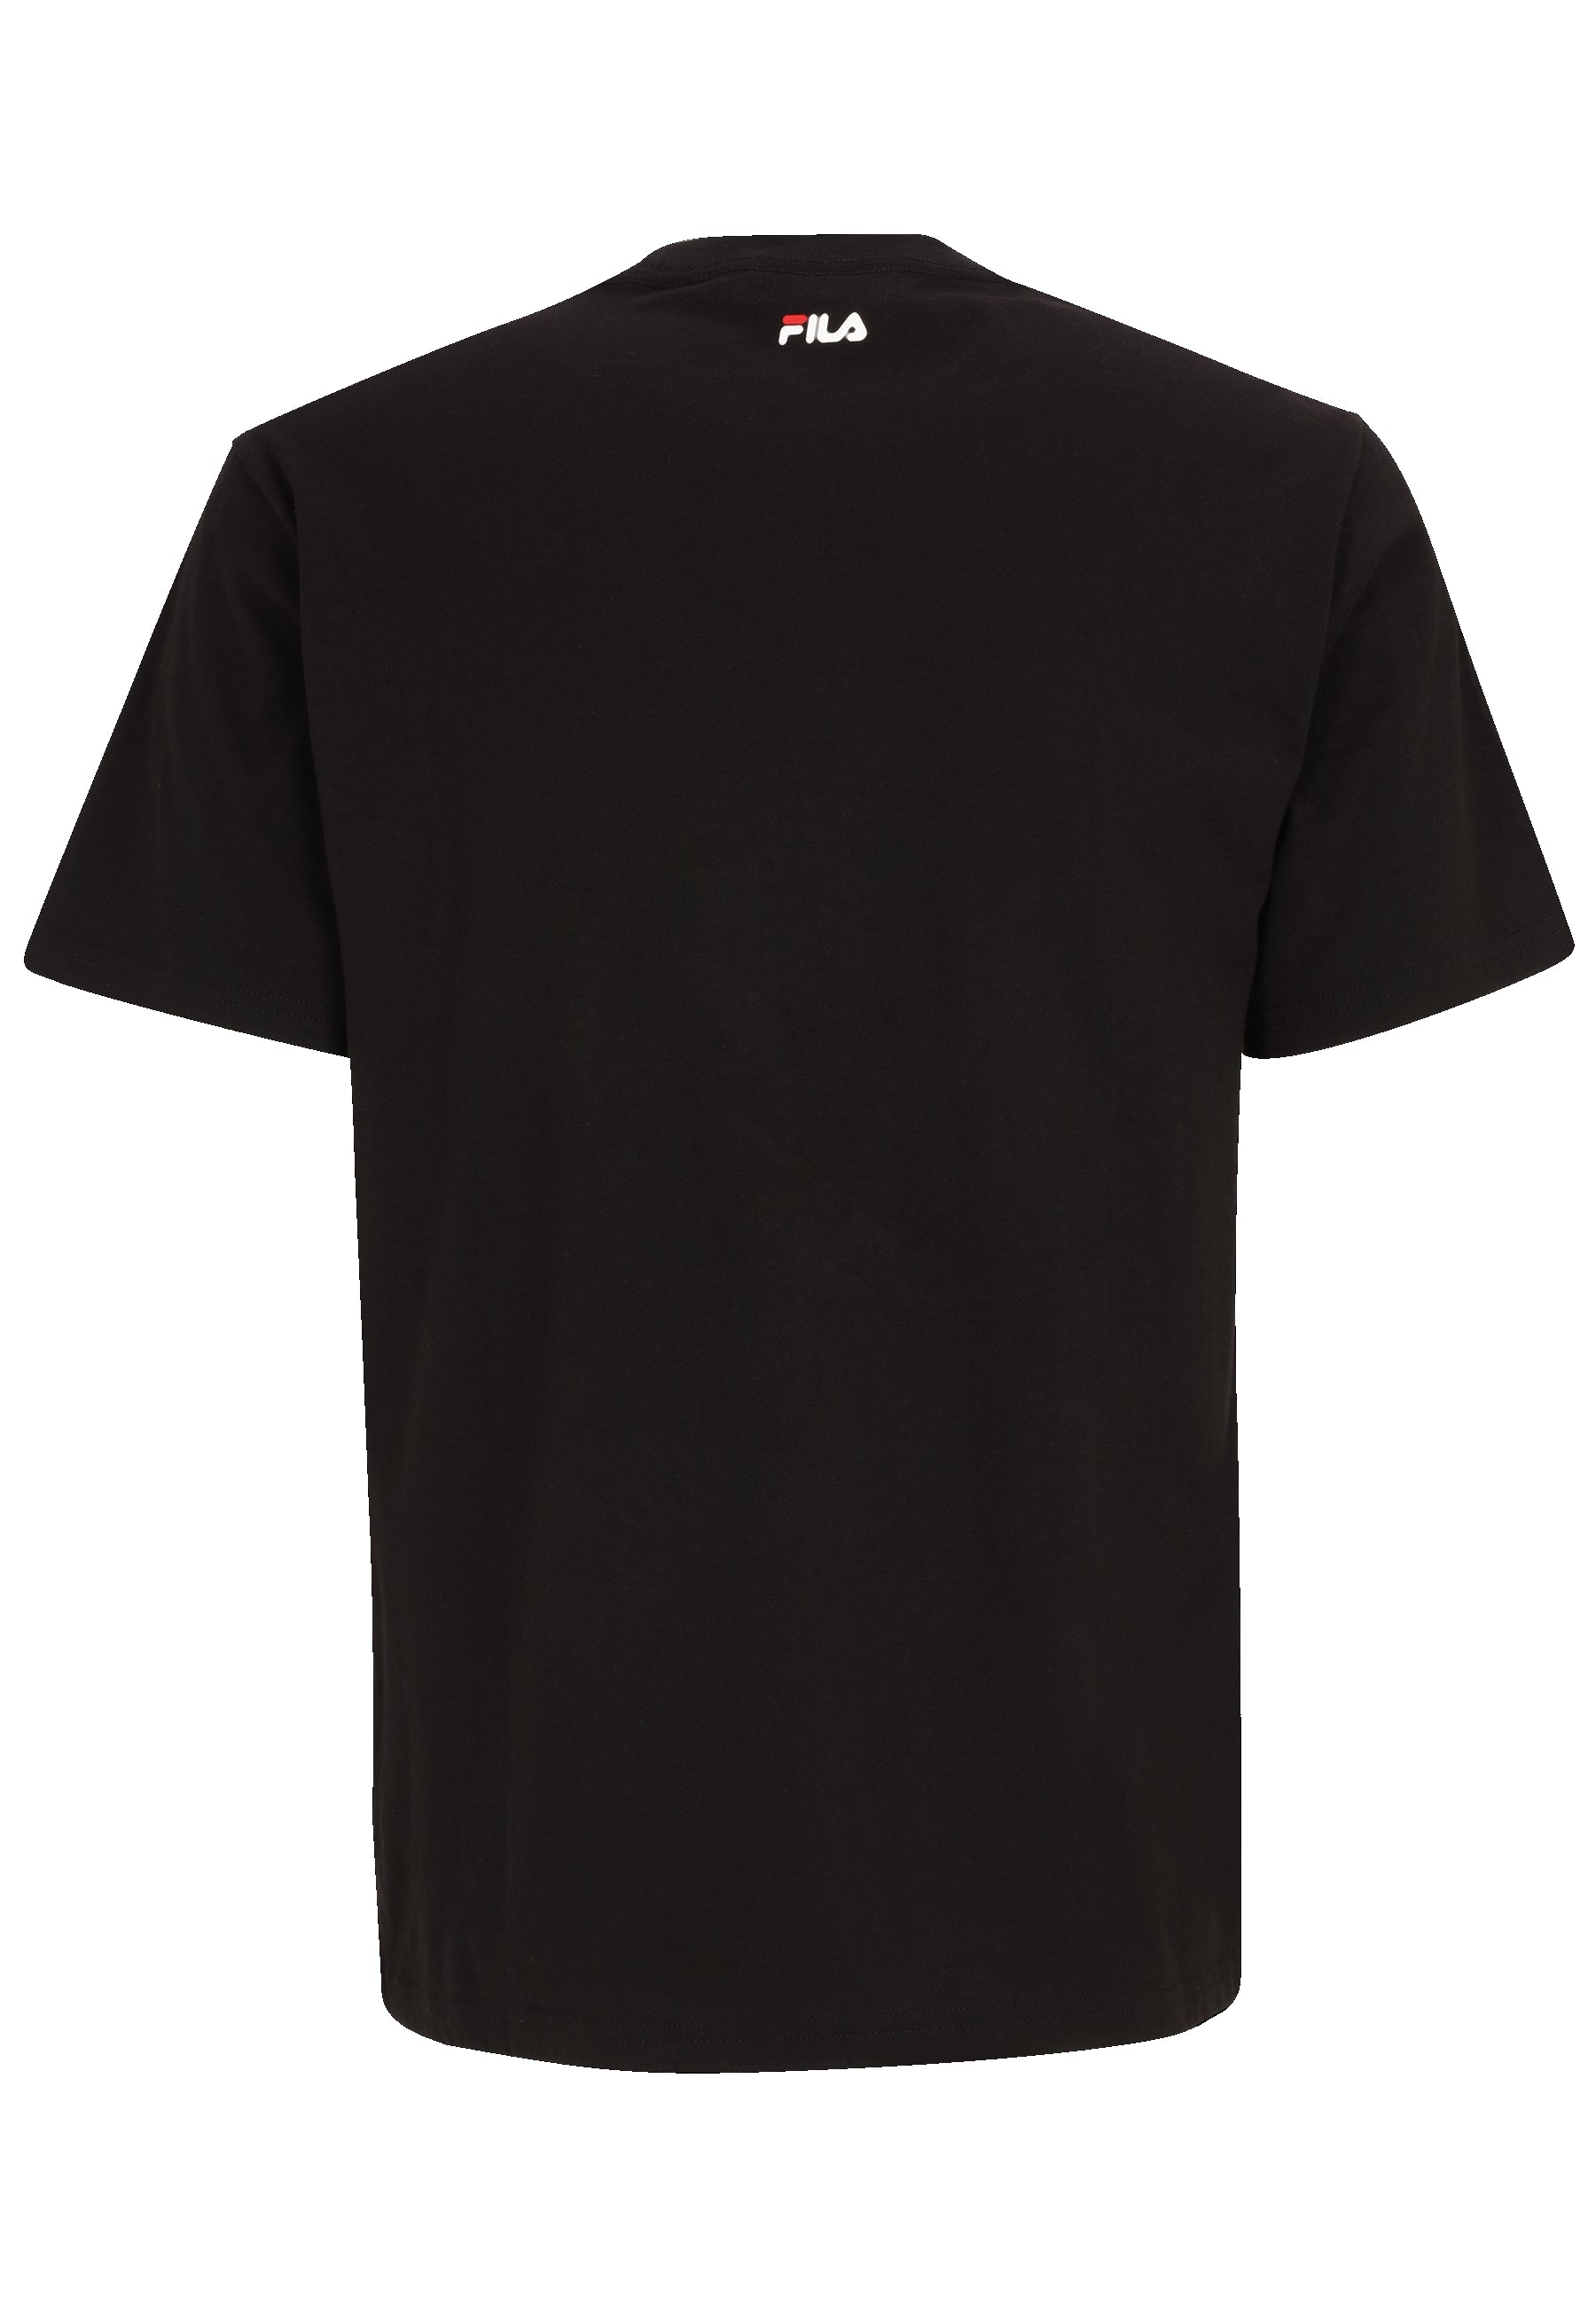 Bellano Tee in Black T-Shirts Fila   